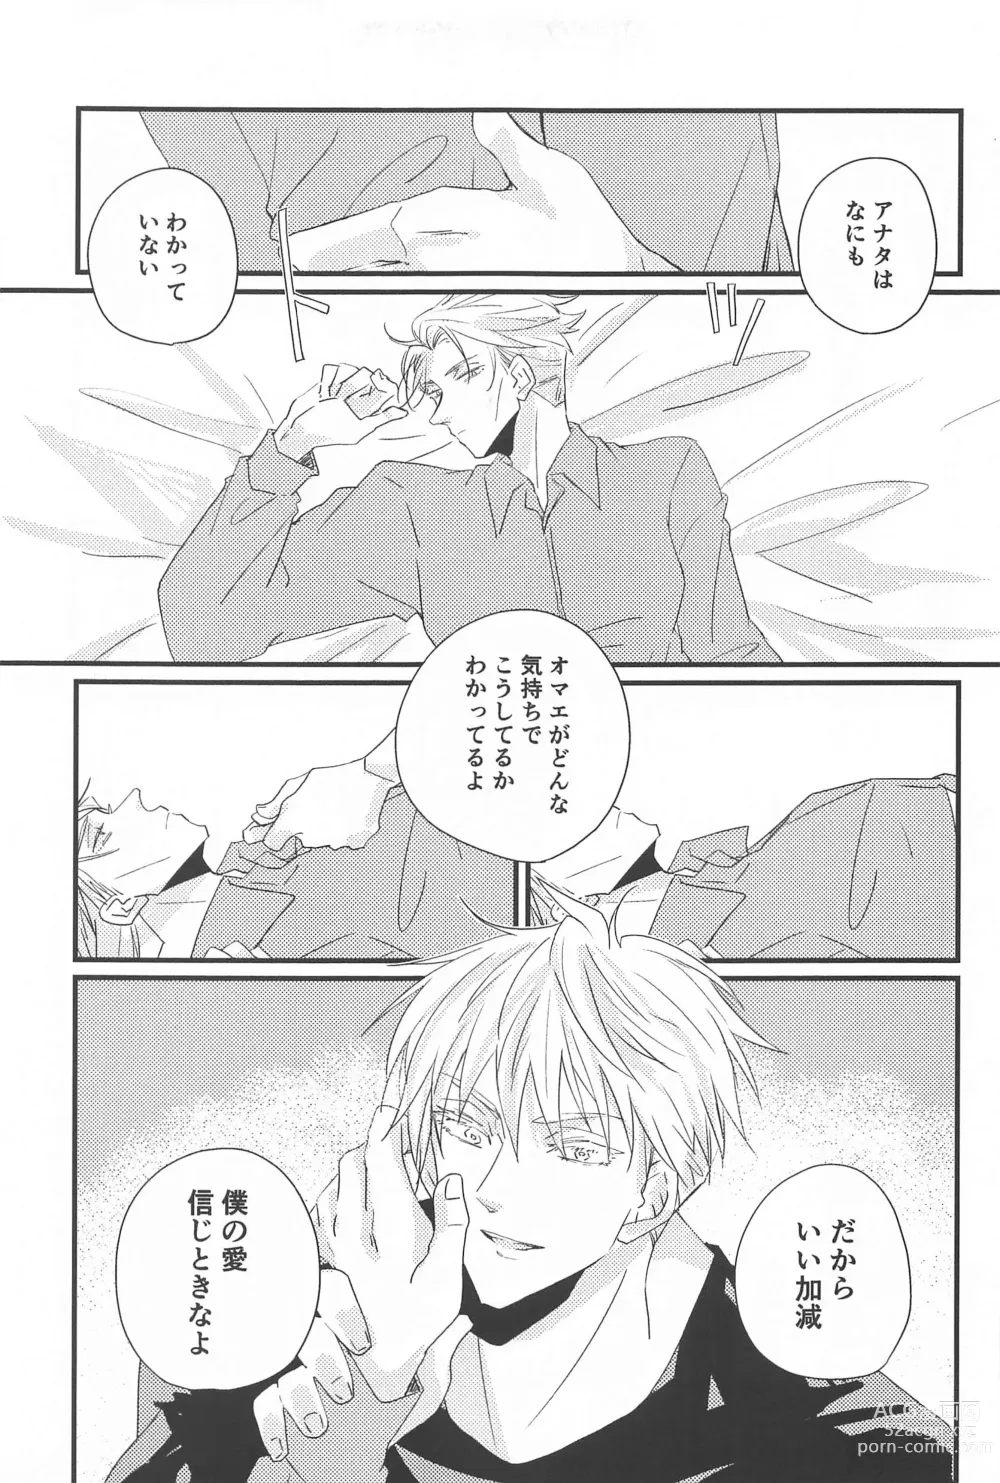 Page 12 of doujinshi timeless memory 2